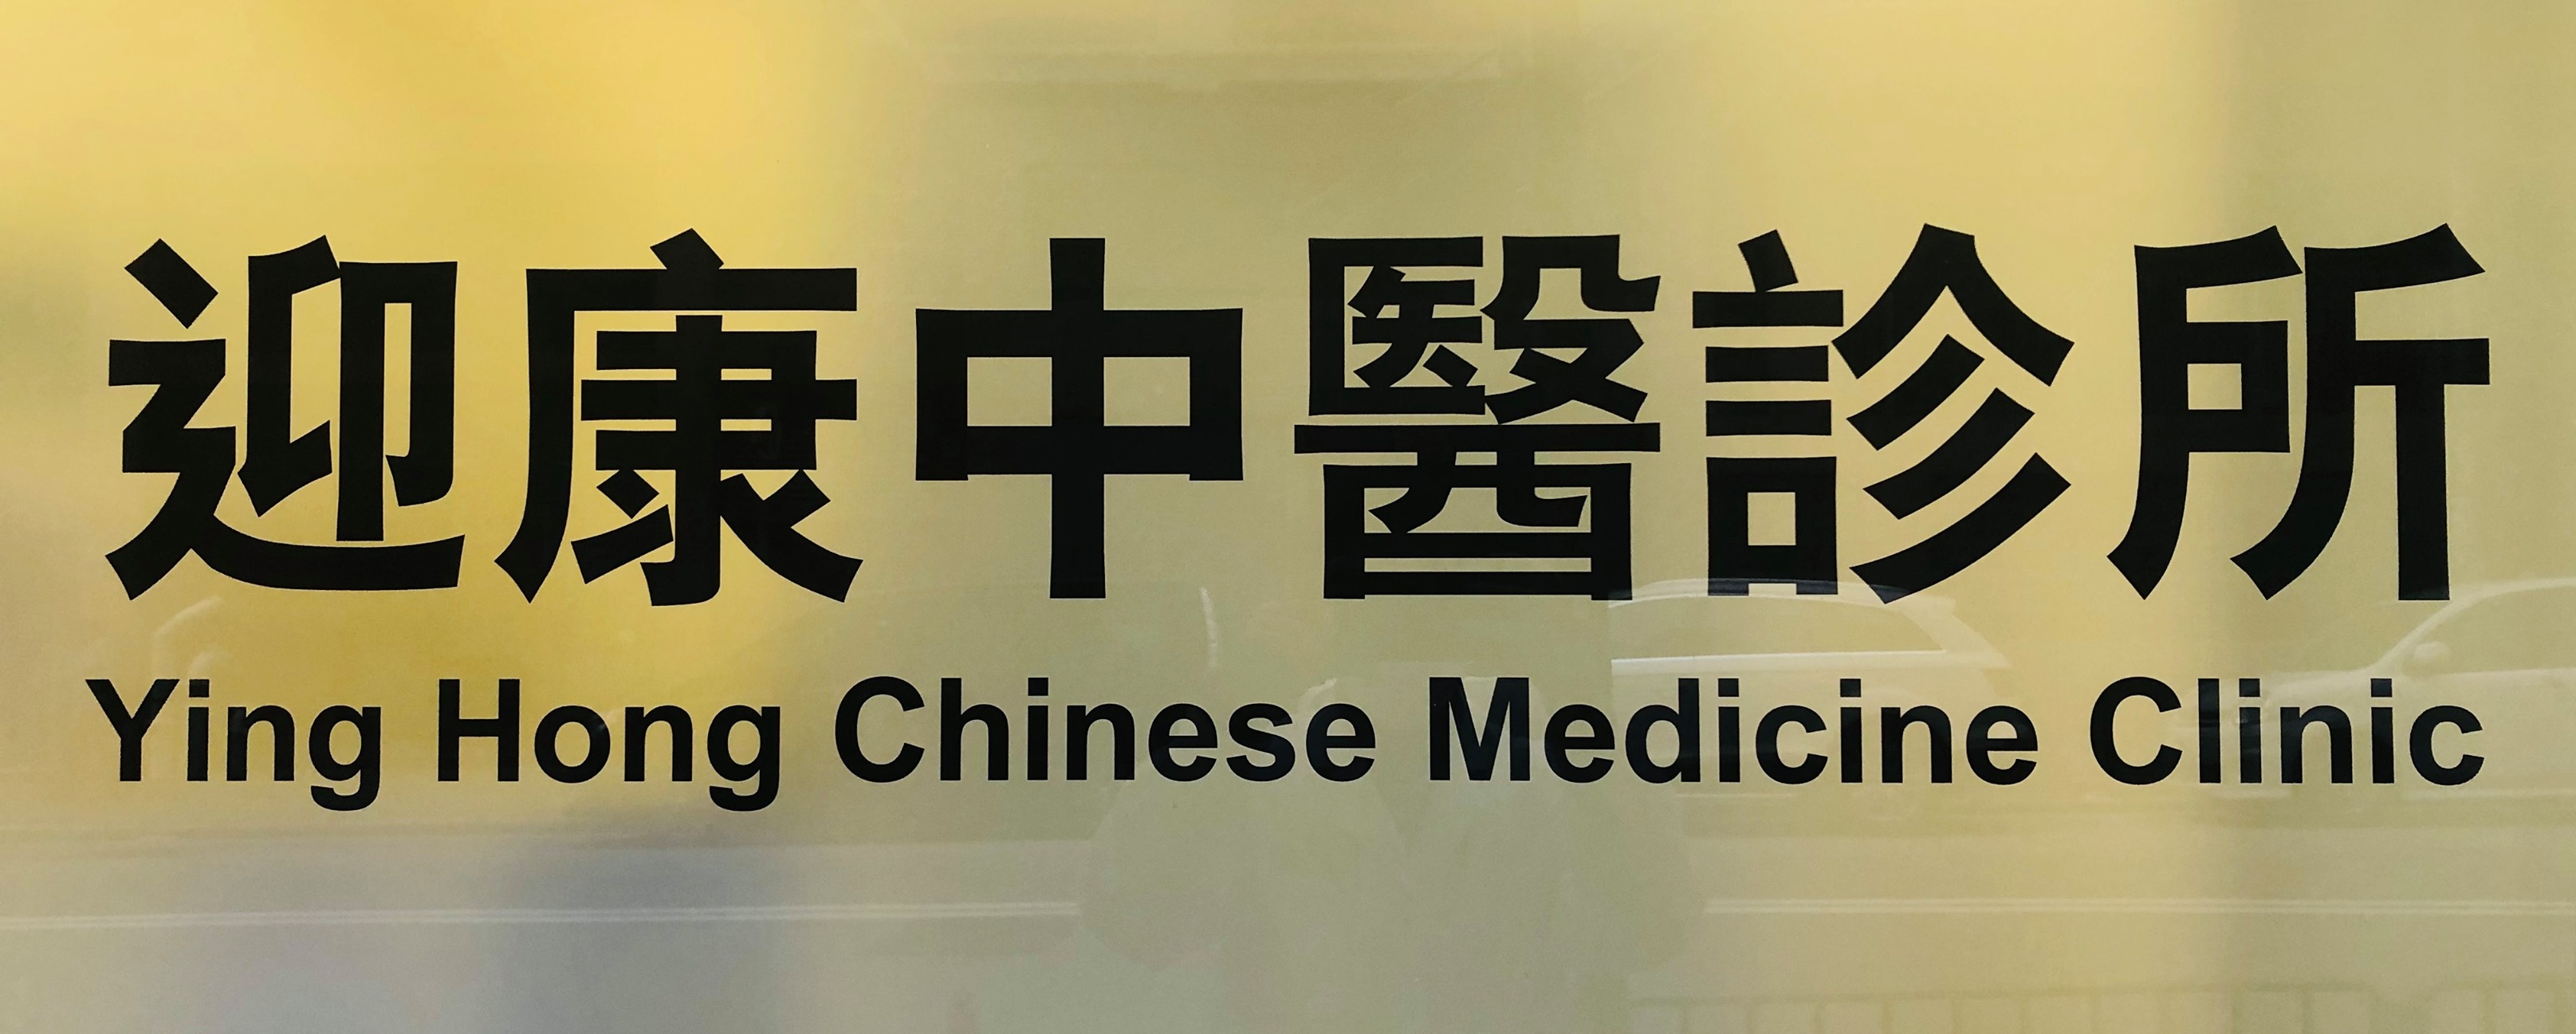 Chinese Medicine Practitioner: 周海升